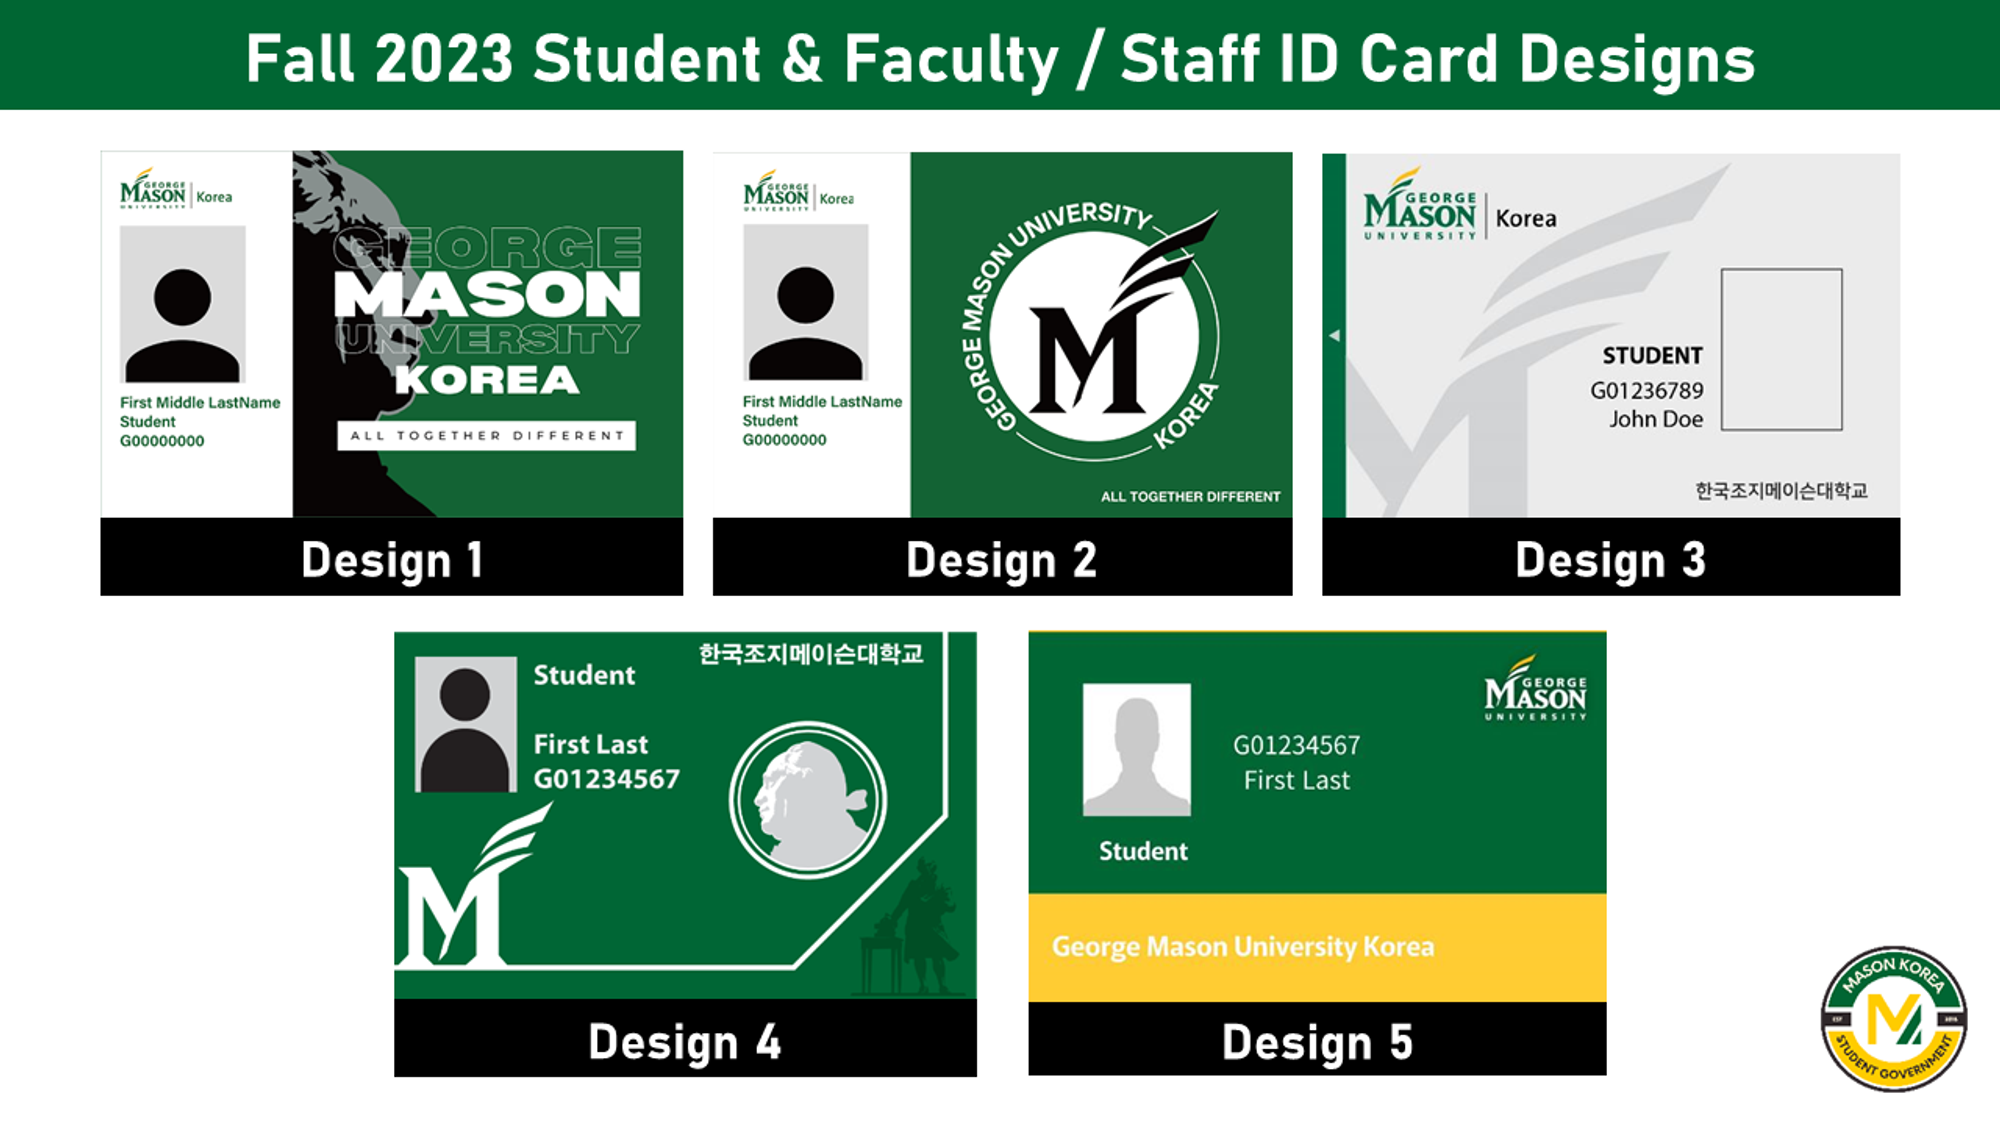 Redesigning the Mason Korea ID Card